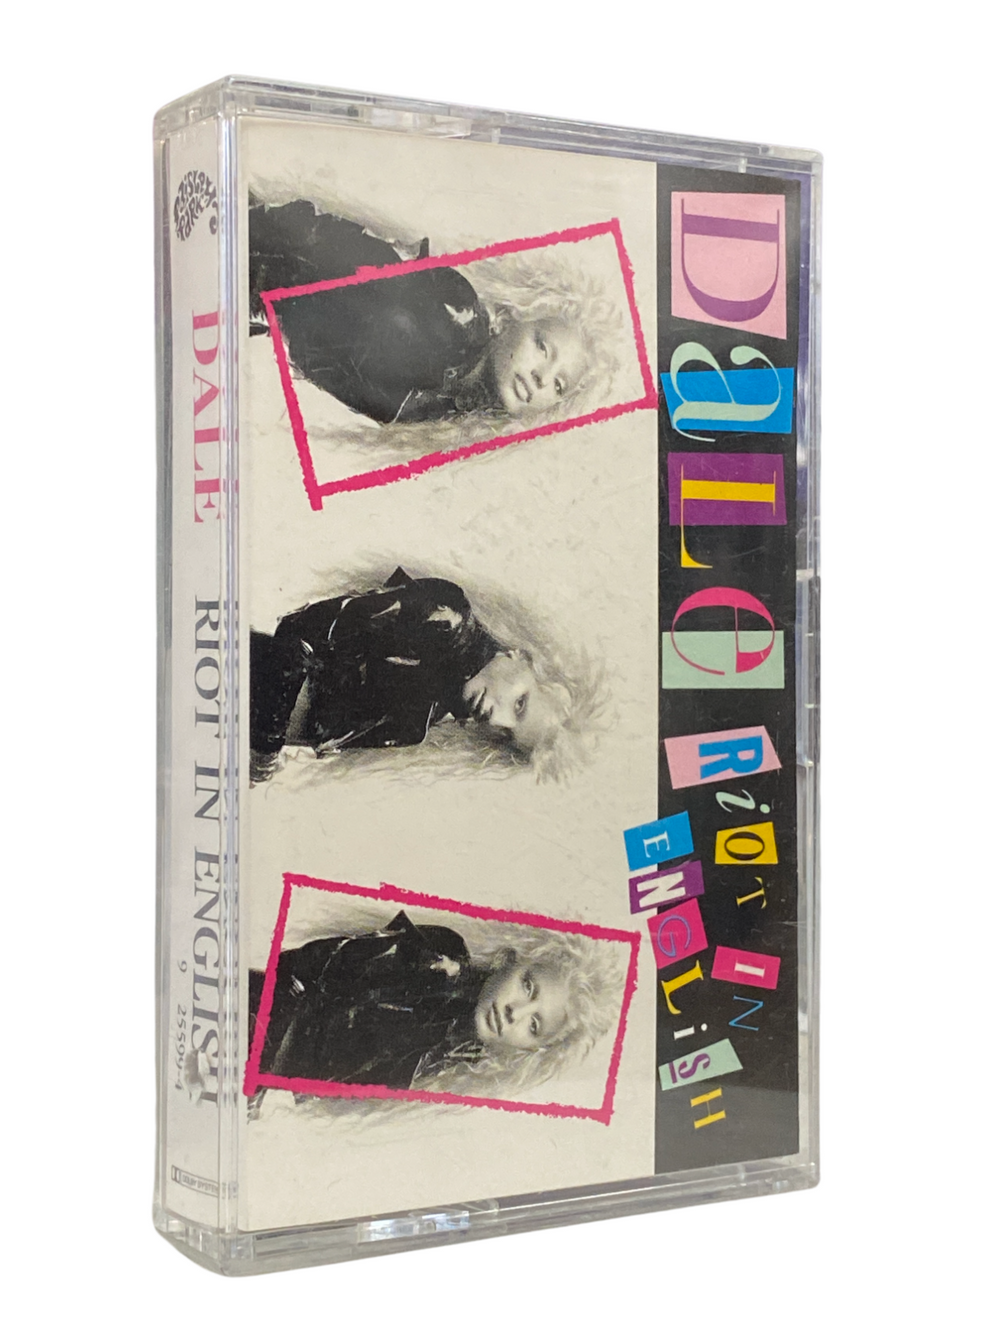 Prince – Dale Riot In English Original Cassette Tape USA 1988 Release Prince